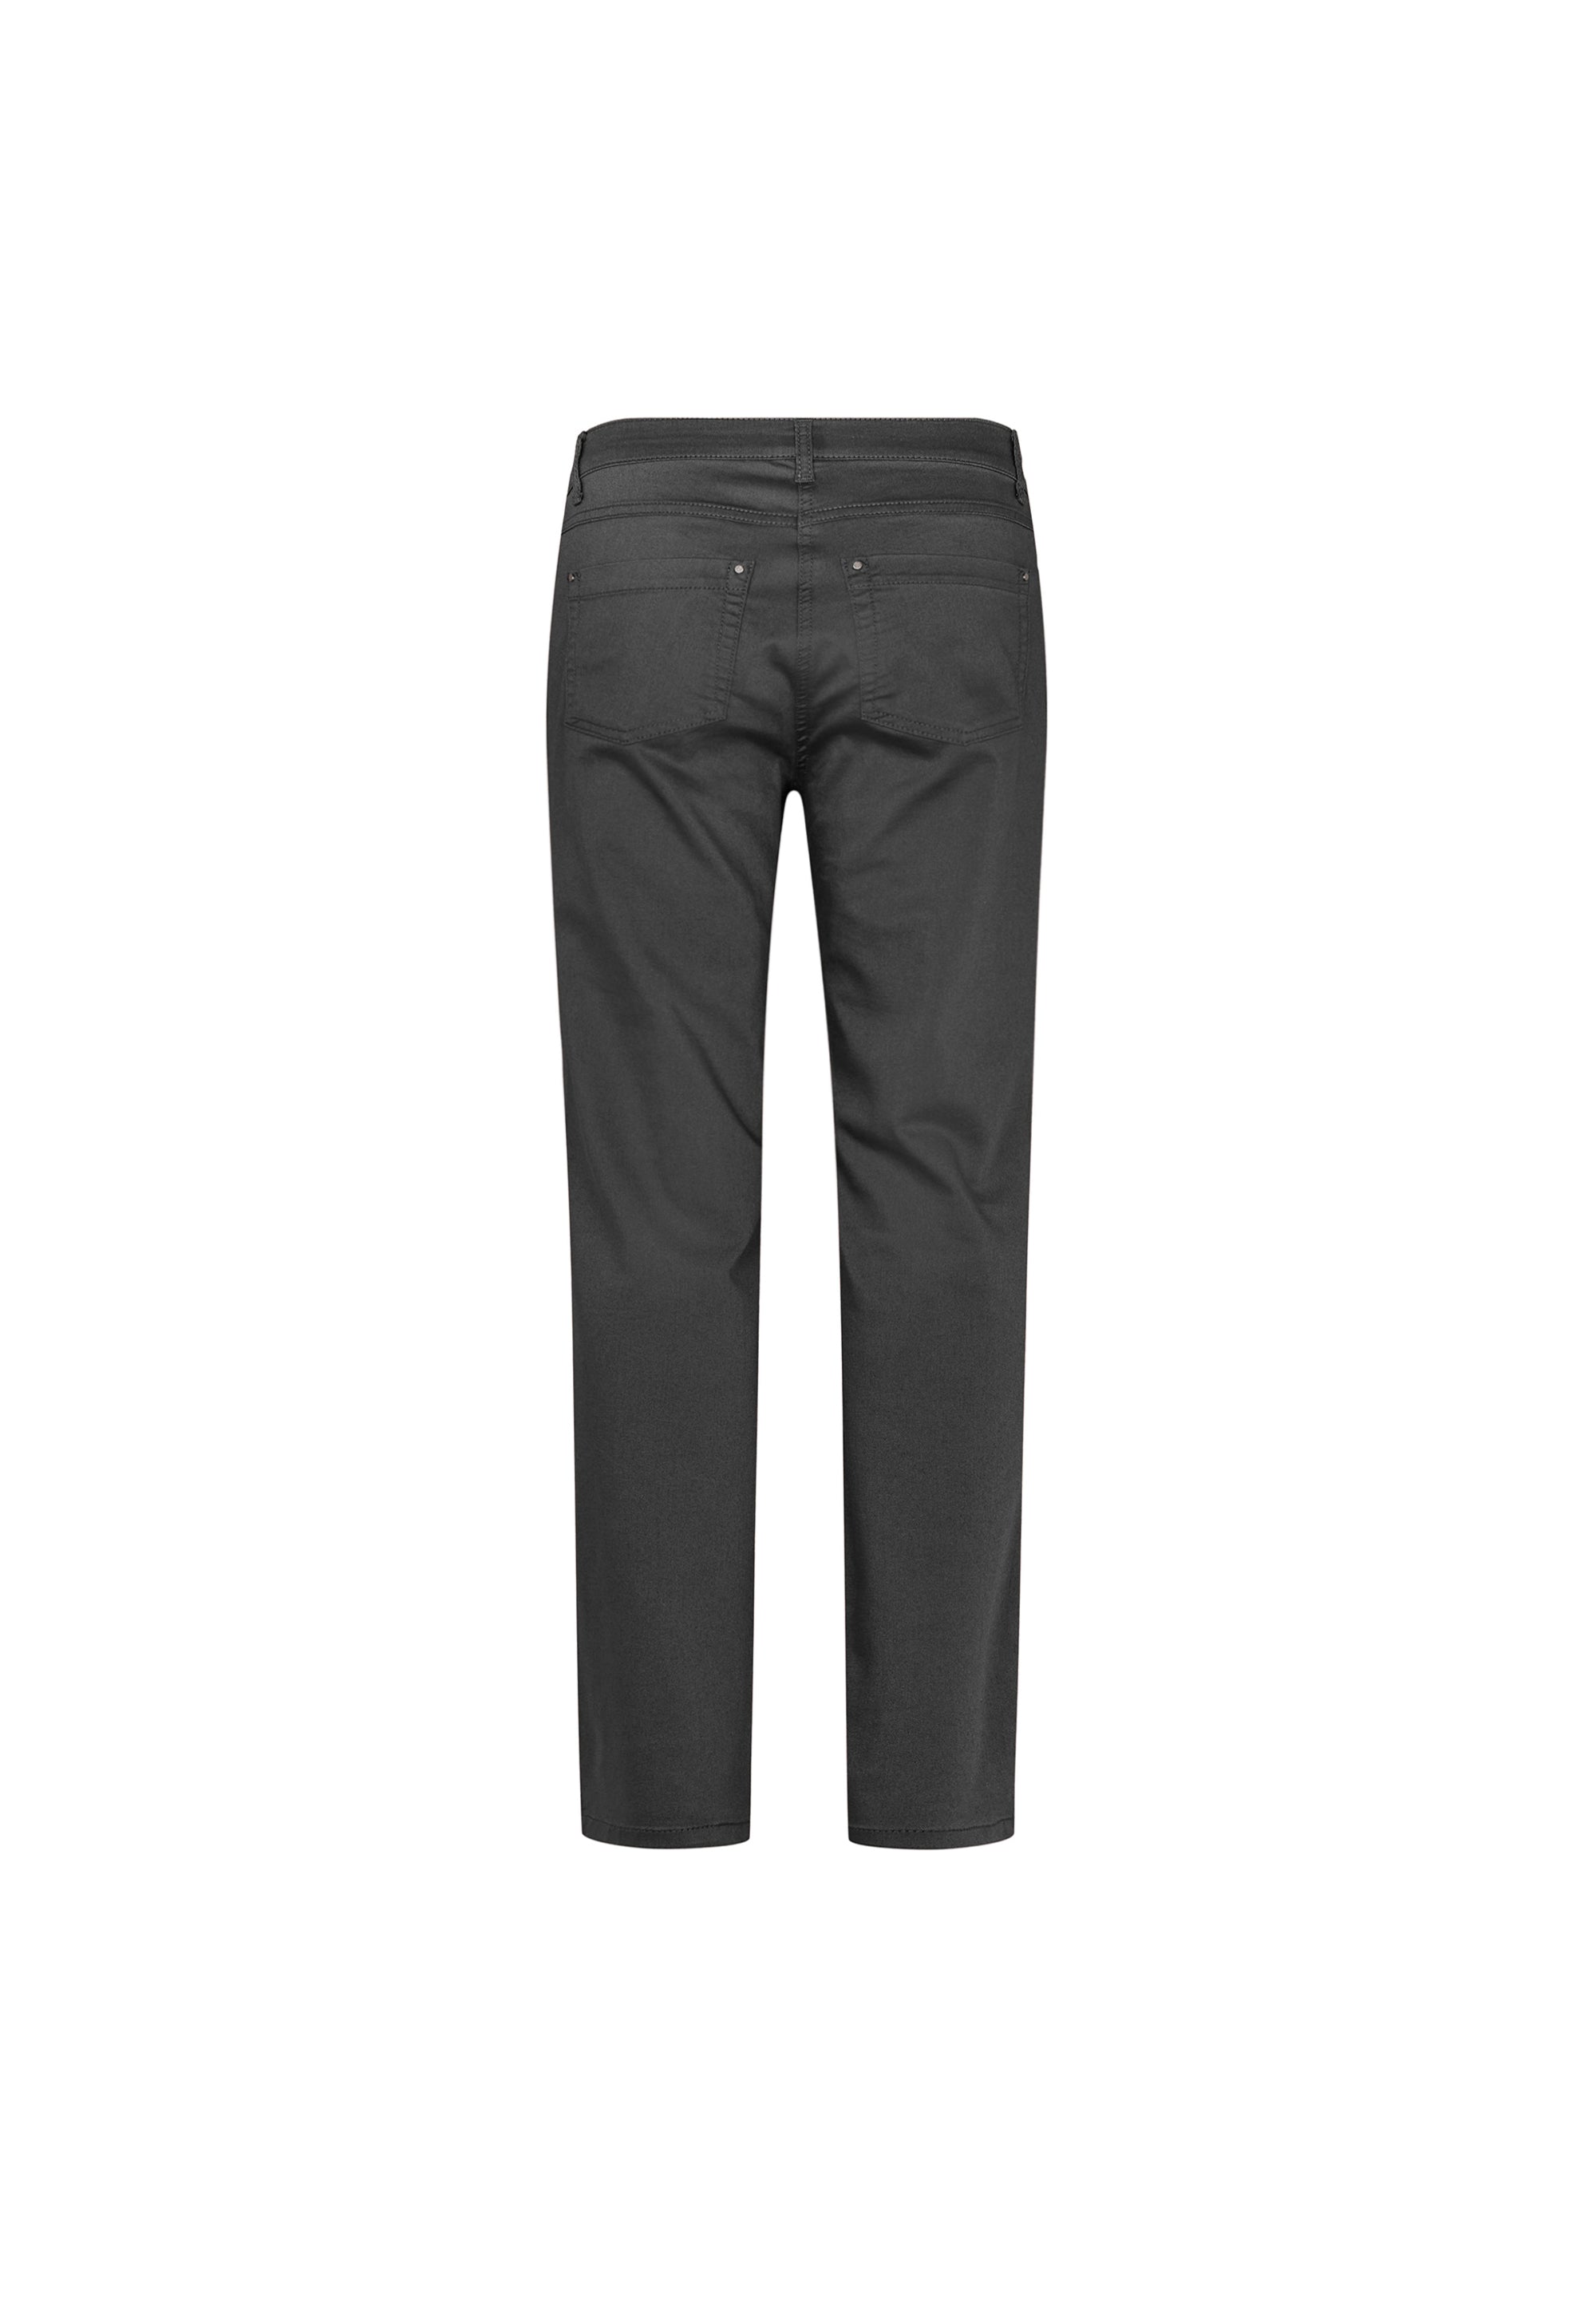 LAURIE Charlotte Regular - Medium Length Trousers REGULAR 99000 Black